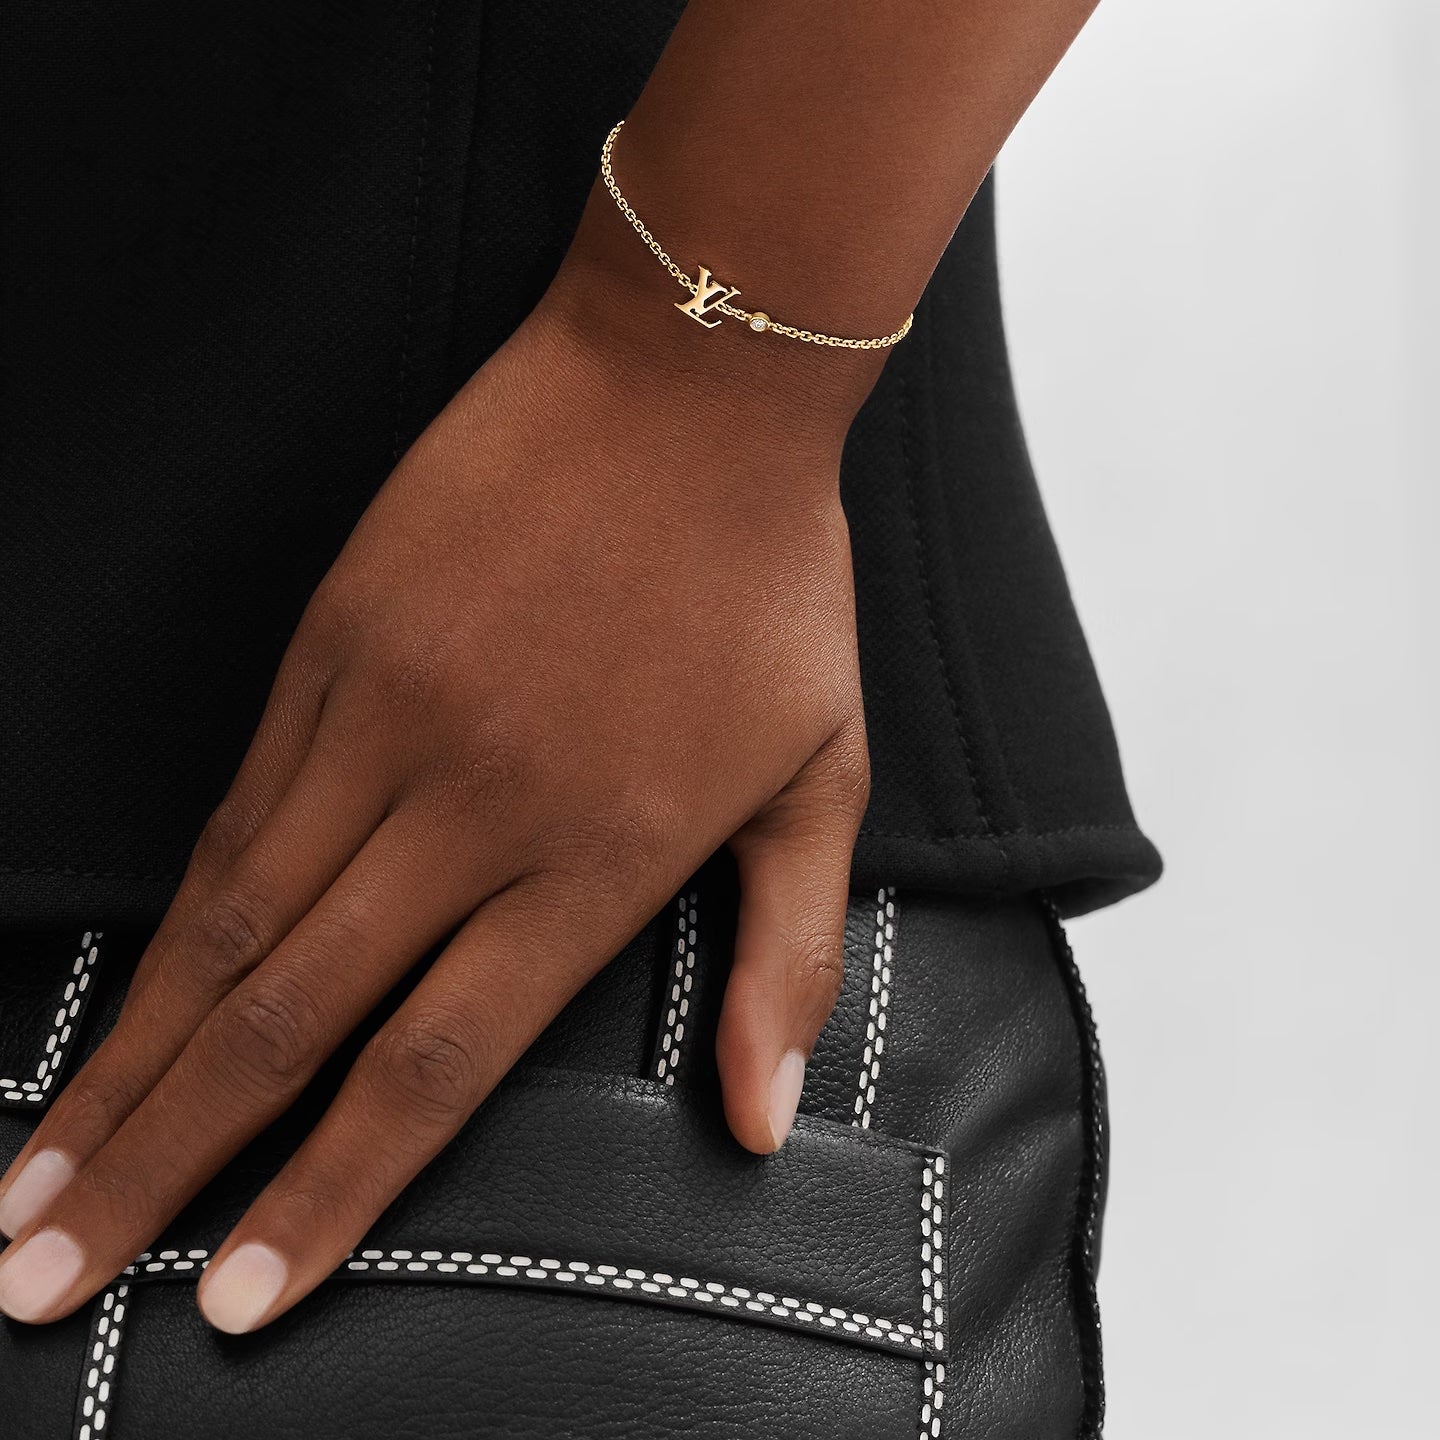 Louis Vuitton Idylle Blossom 18k Gold Chain Bracelet